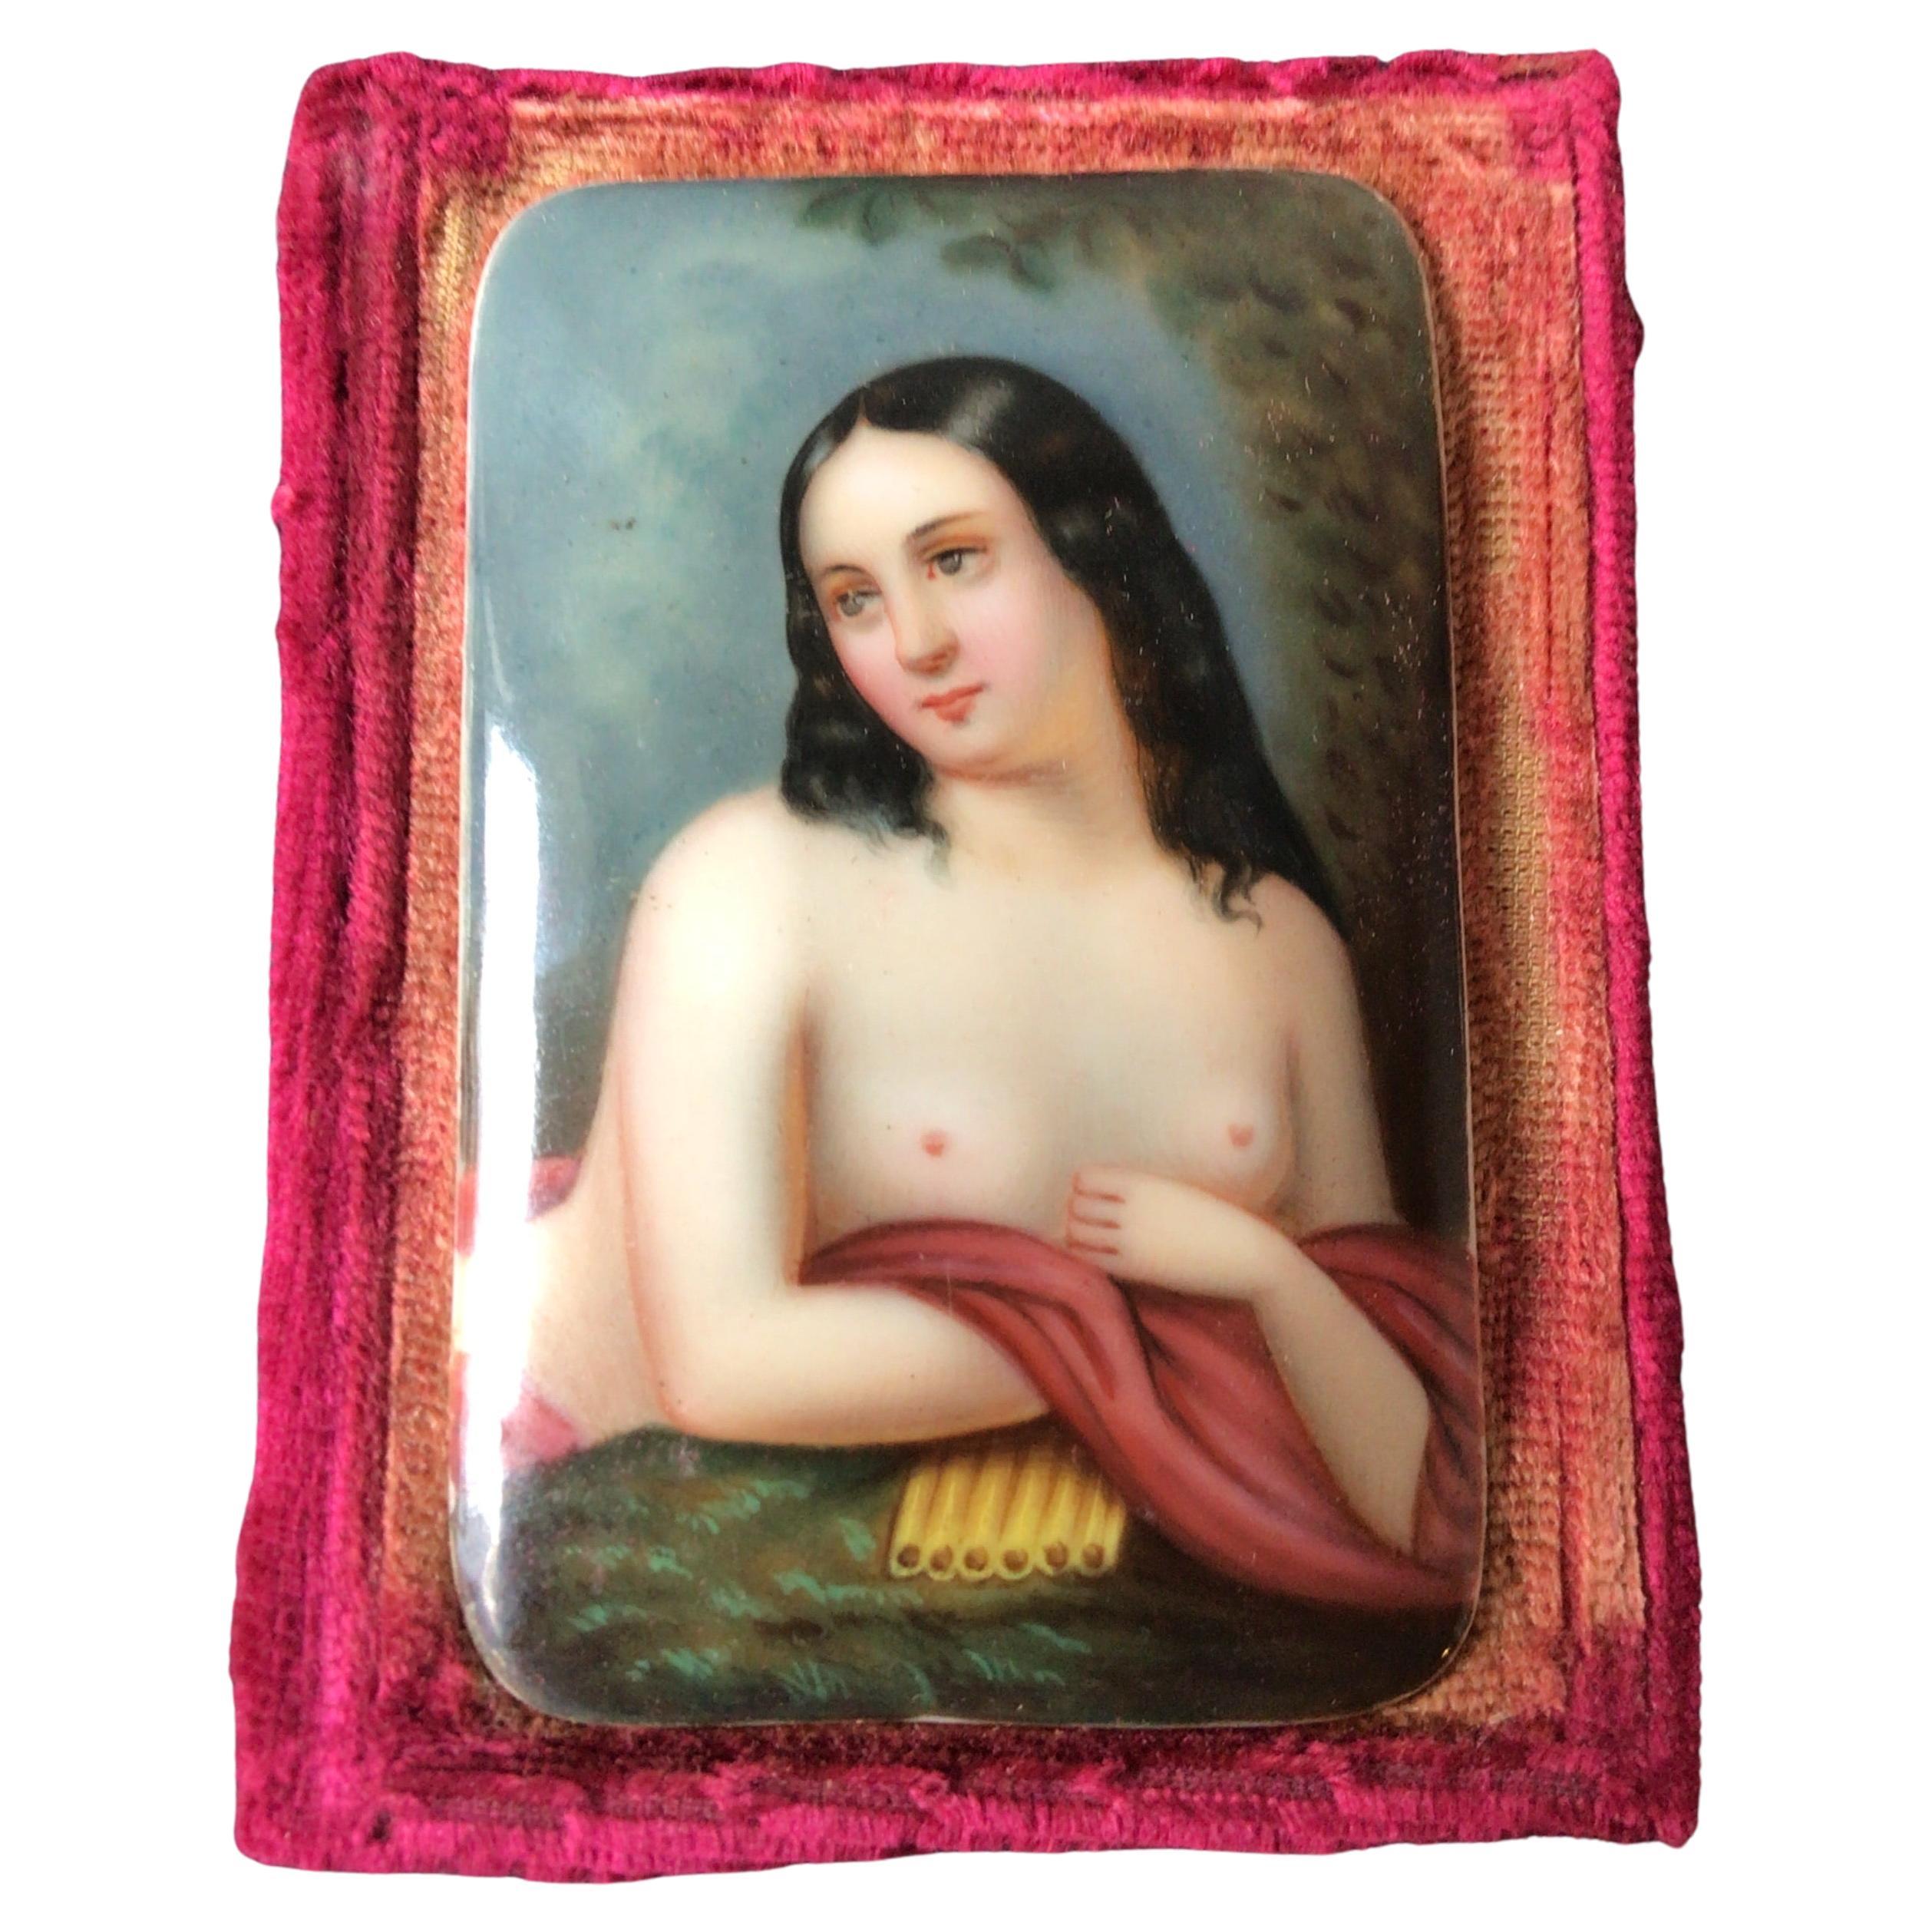 1870s Minature Portrait on Porcelain of Nude Woman For Sale